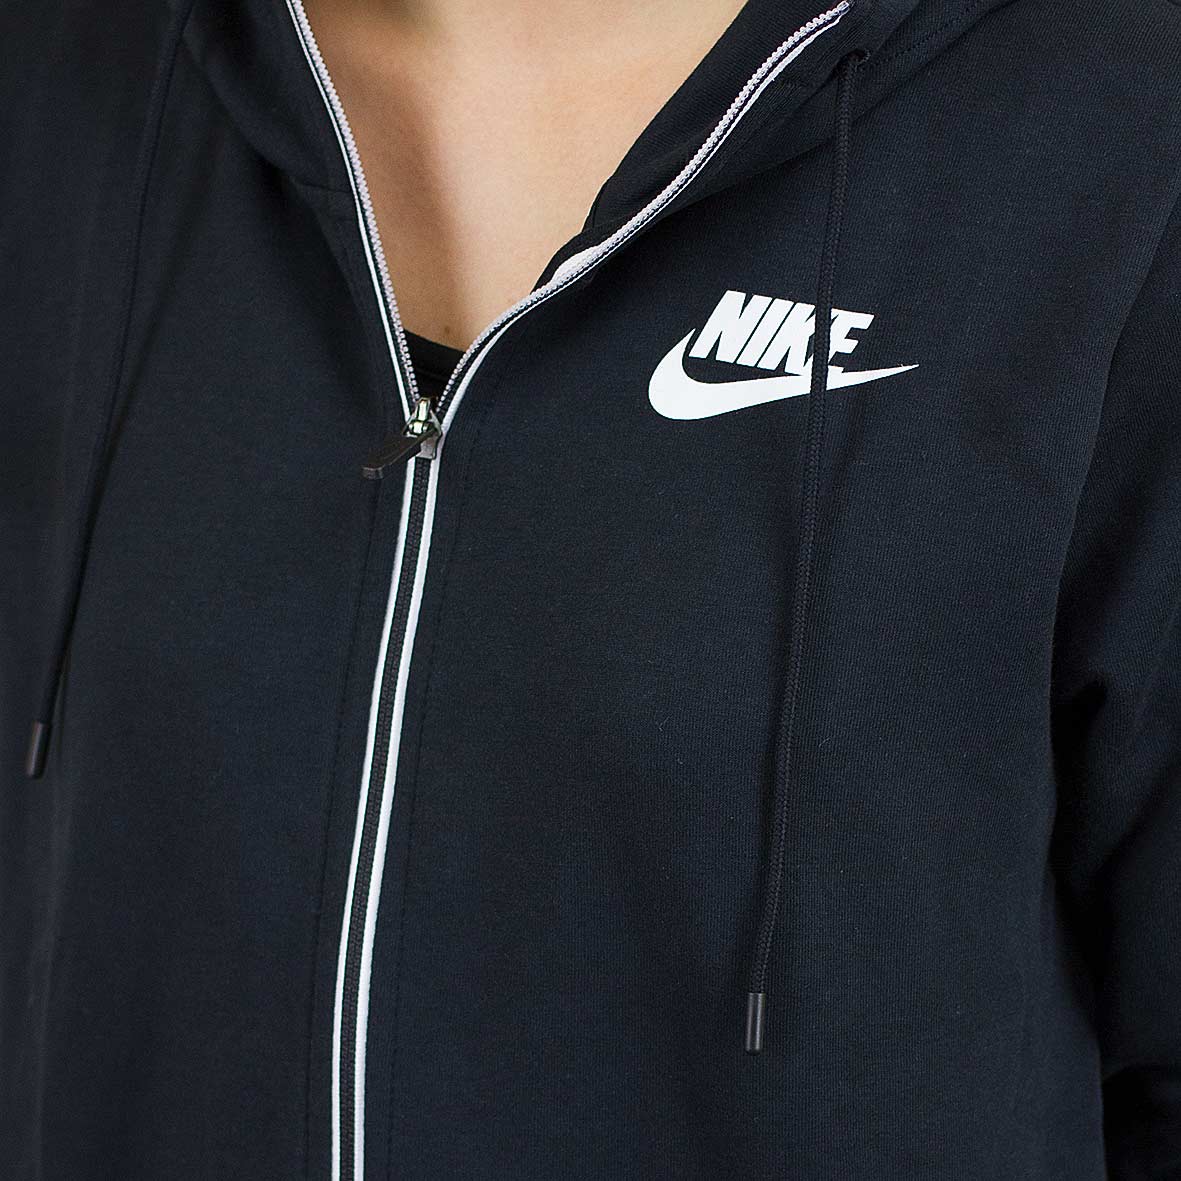 ☆ Nike Damen Zip-Hoody Advance 15 schwarz/weiß - hier bestellen!